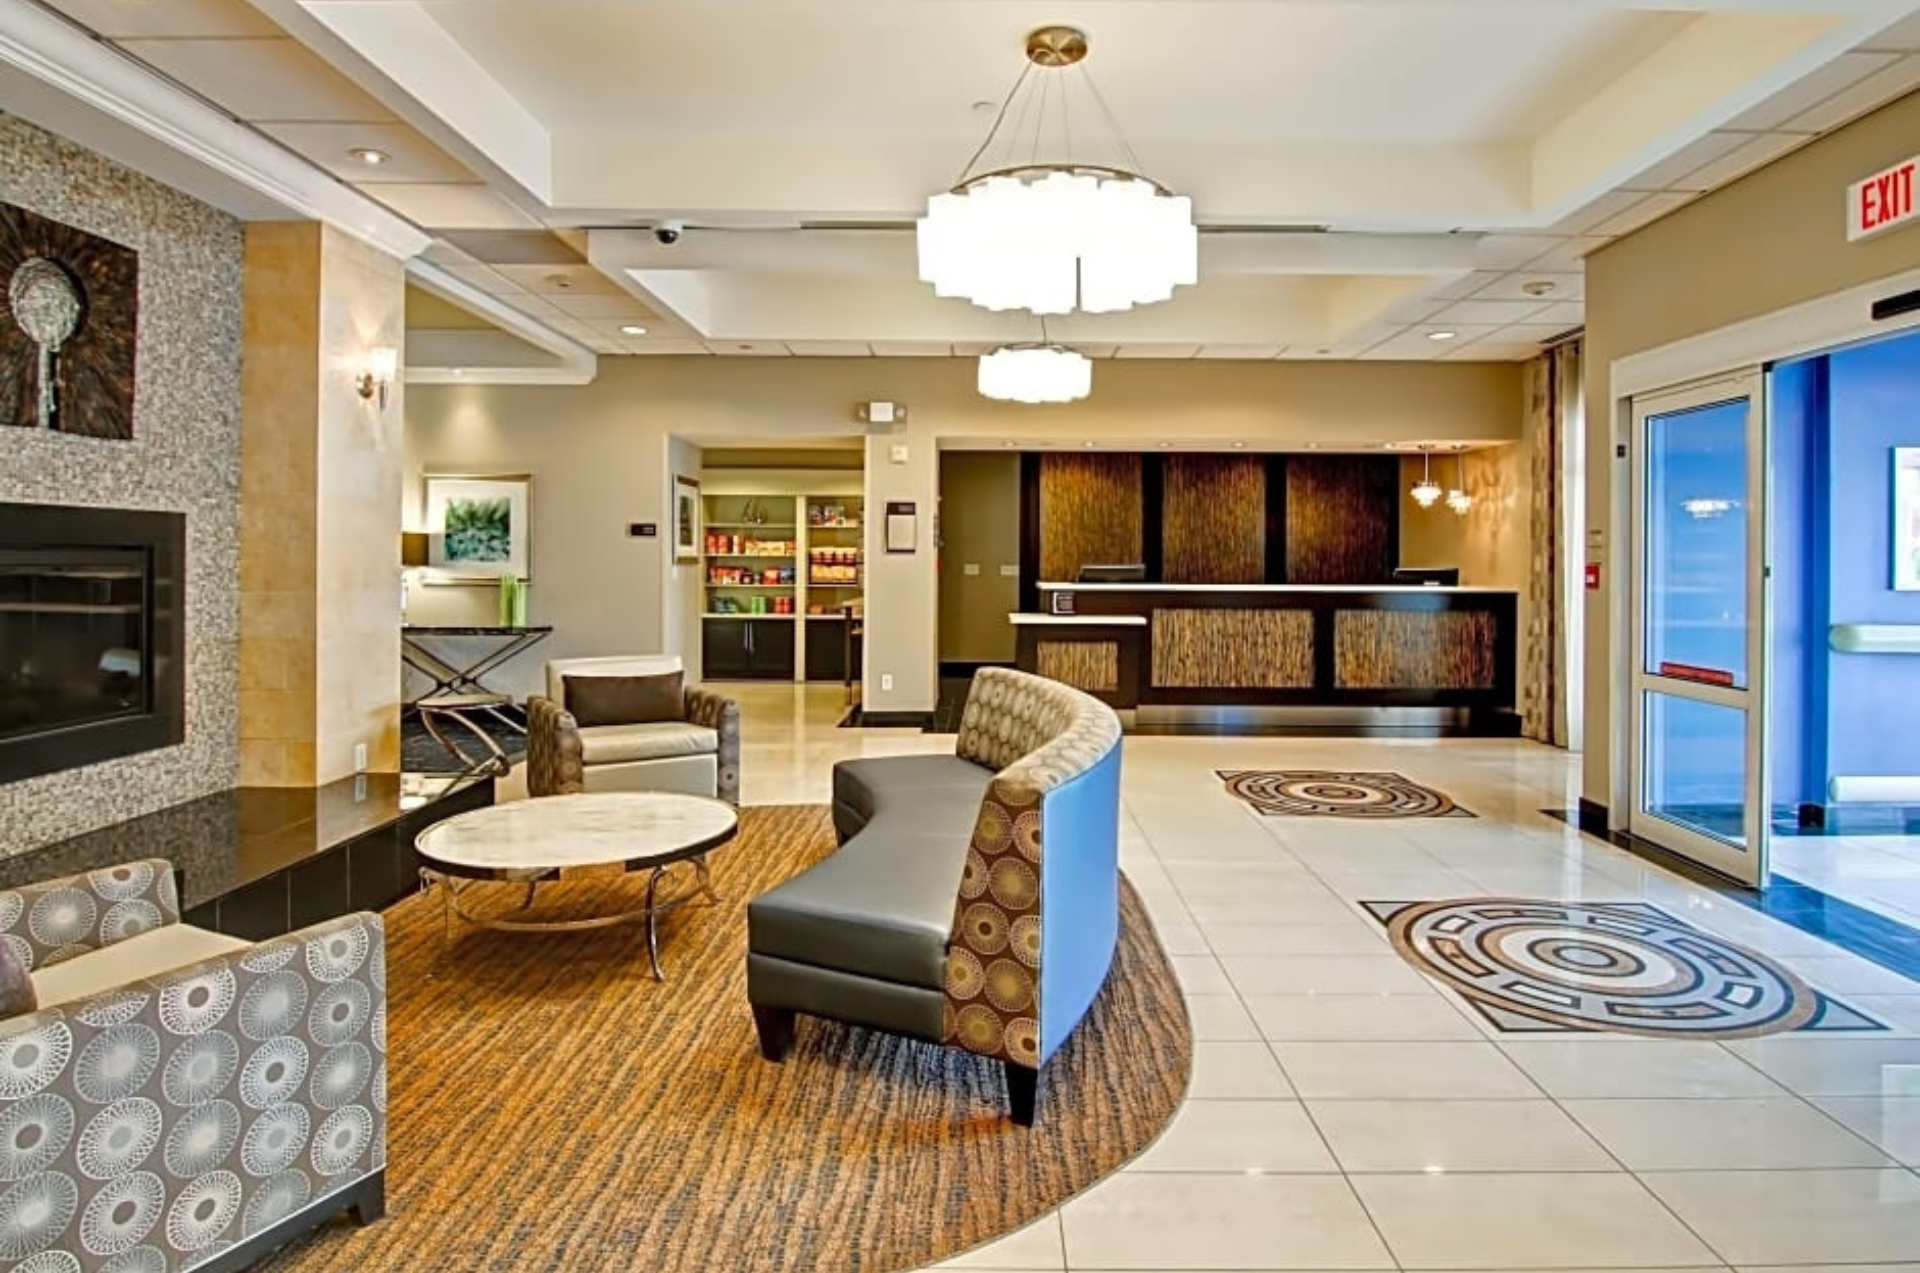 Homewood suites lobby  / Lobby des suites Homewood 